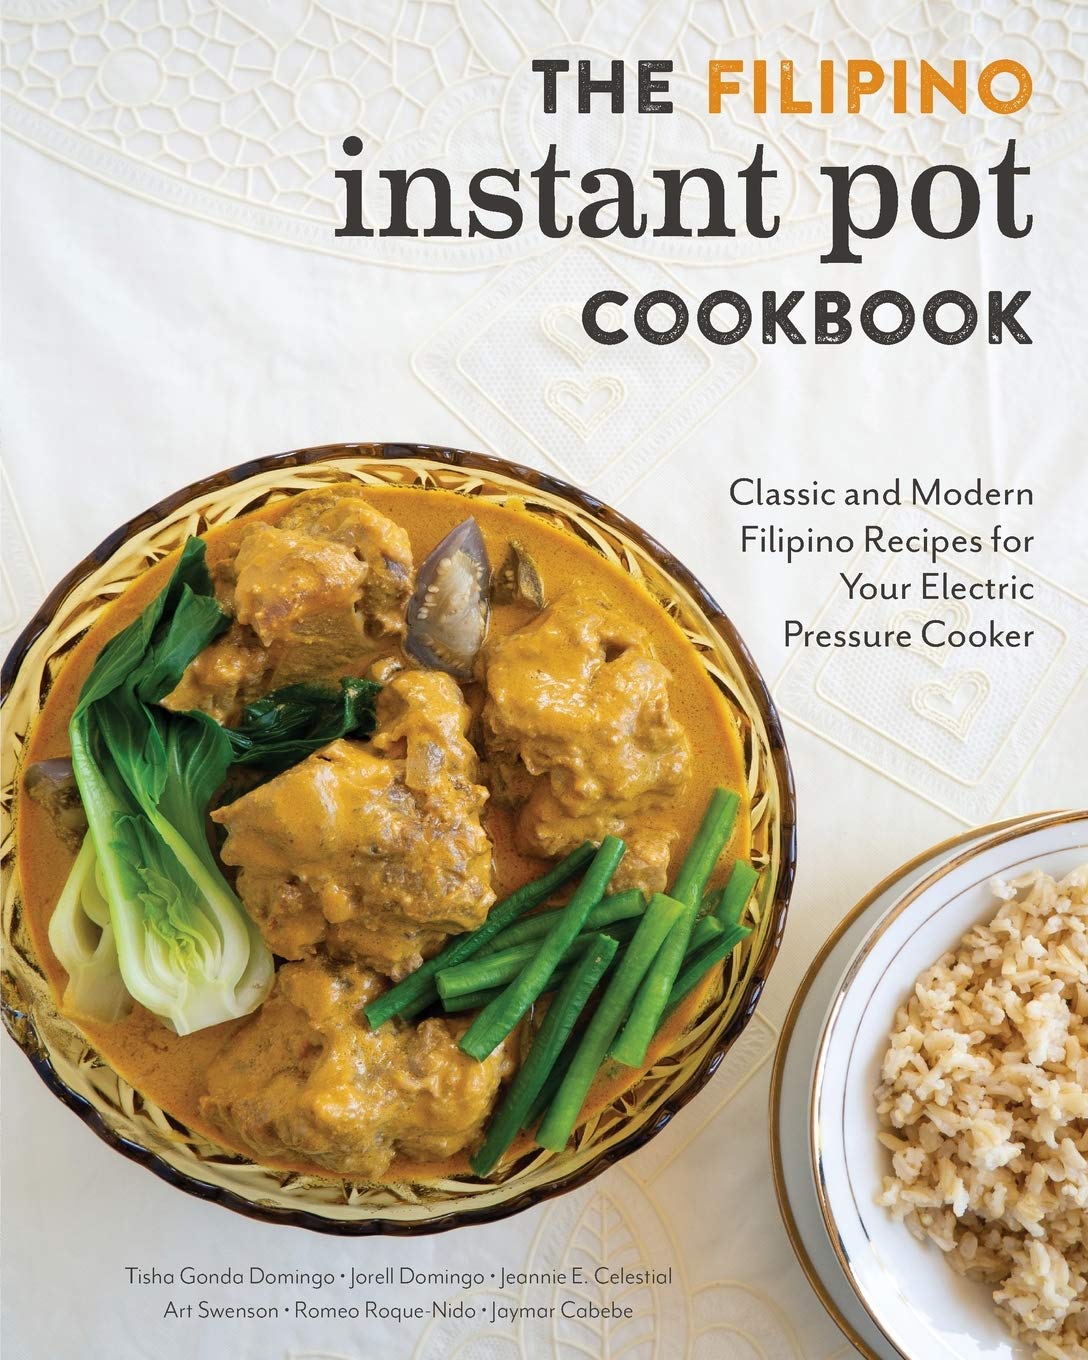 The Filipino Instant Pot Cookbook: Classic and Modern Filipino Recipes for Your Electric Pressure Cooker (Tisha Gonda Domingo, Jeannie E Celestial, Romeo Roque-Nido)